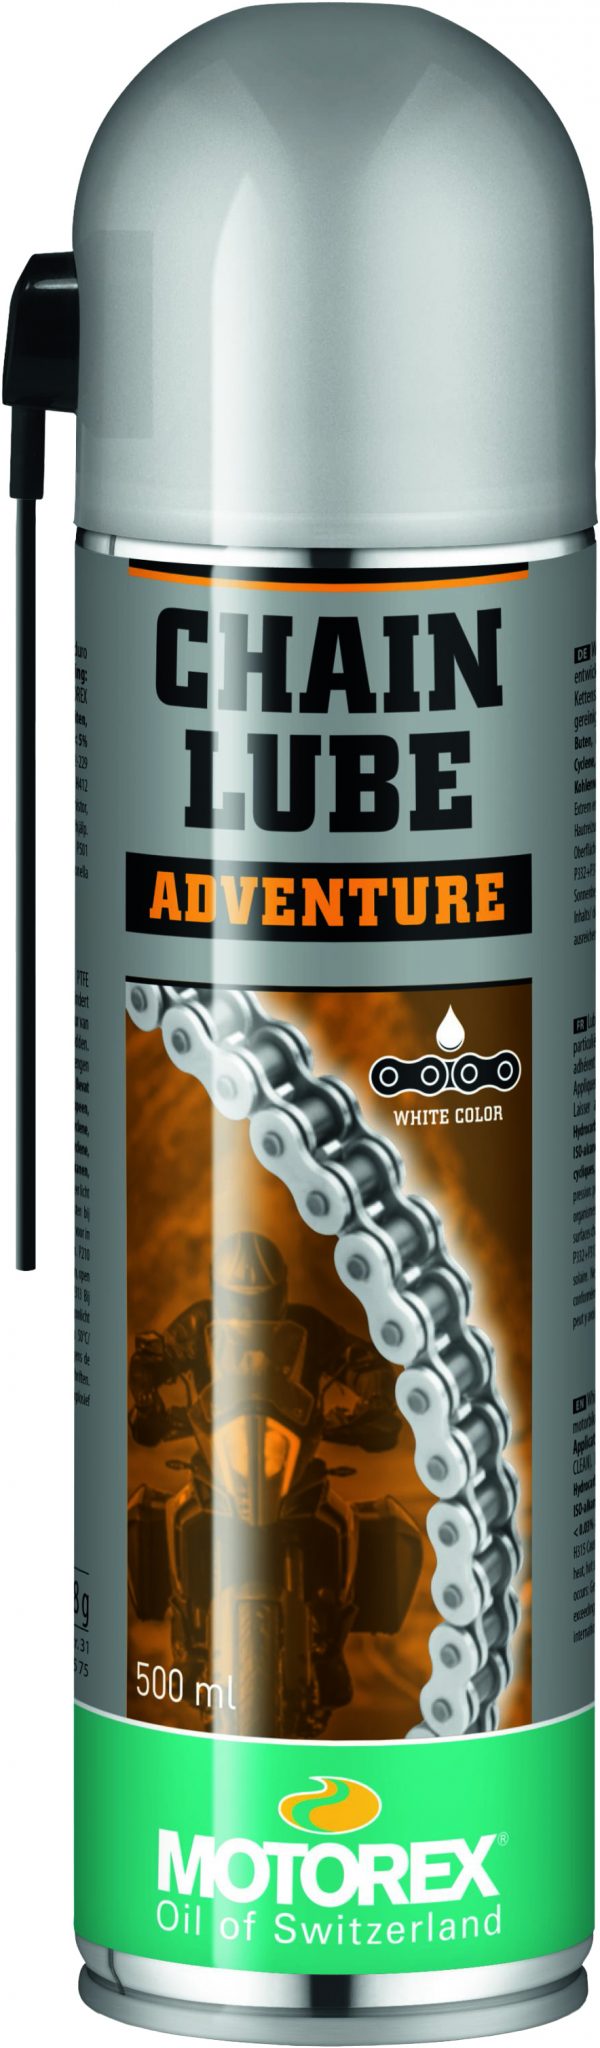 Chain Lube Adventure Image